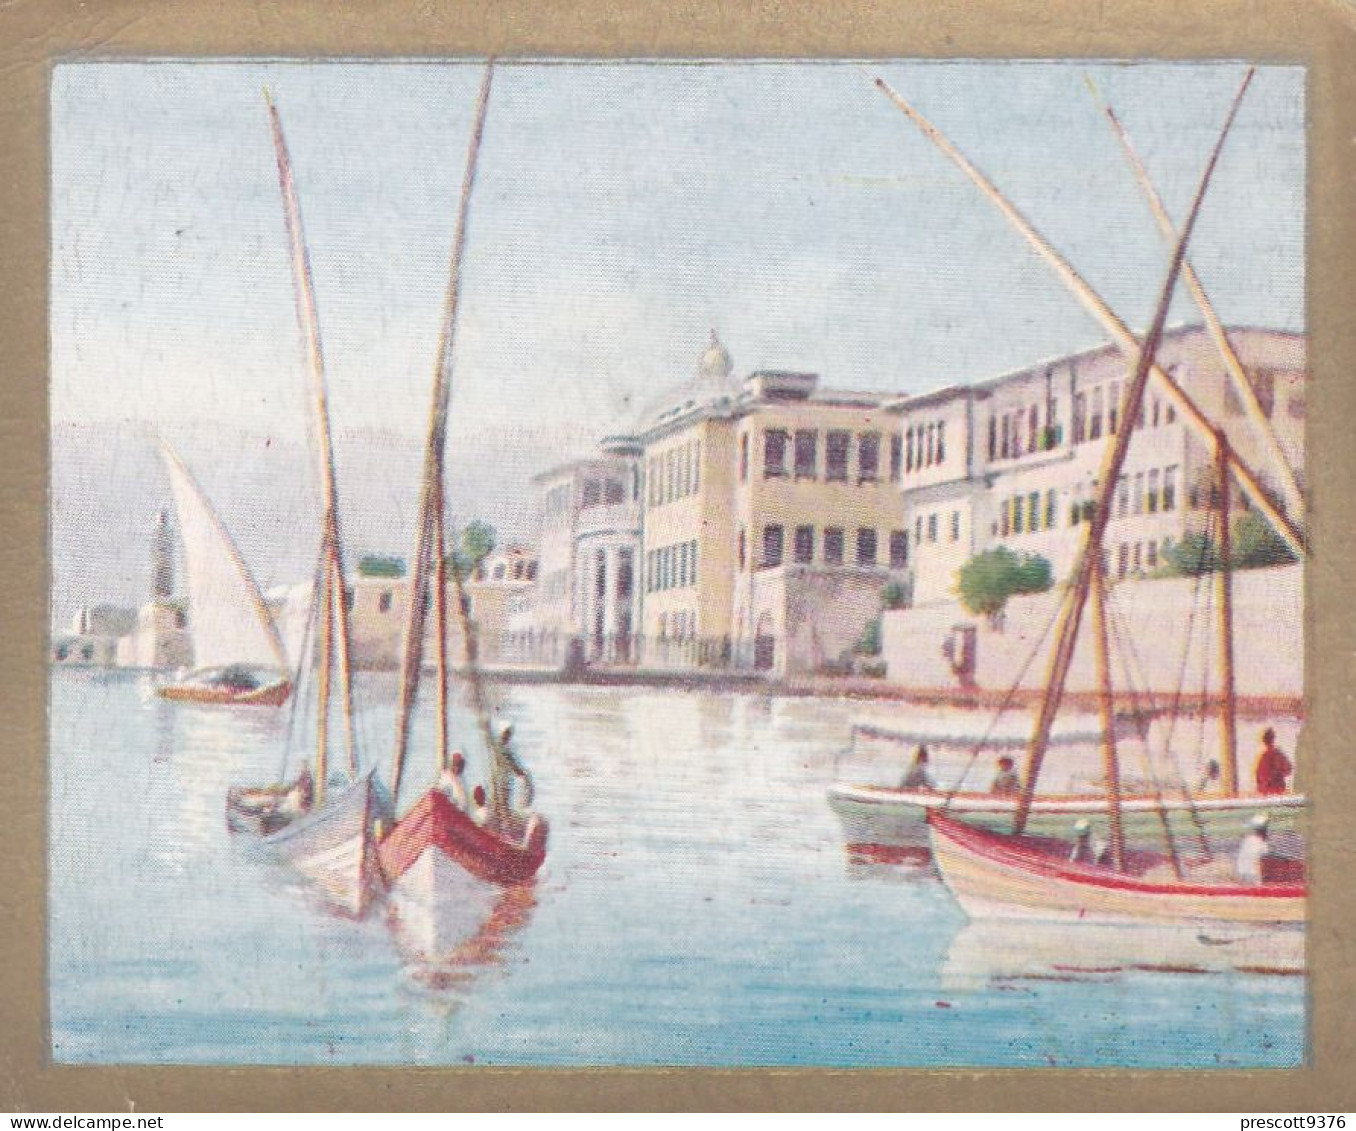 Around The Mediterranean 1926 - 41 Alexandria, Ras Et Tin Palace - Sarony Cigarette Card - Original Card - Large Size - Wills